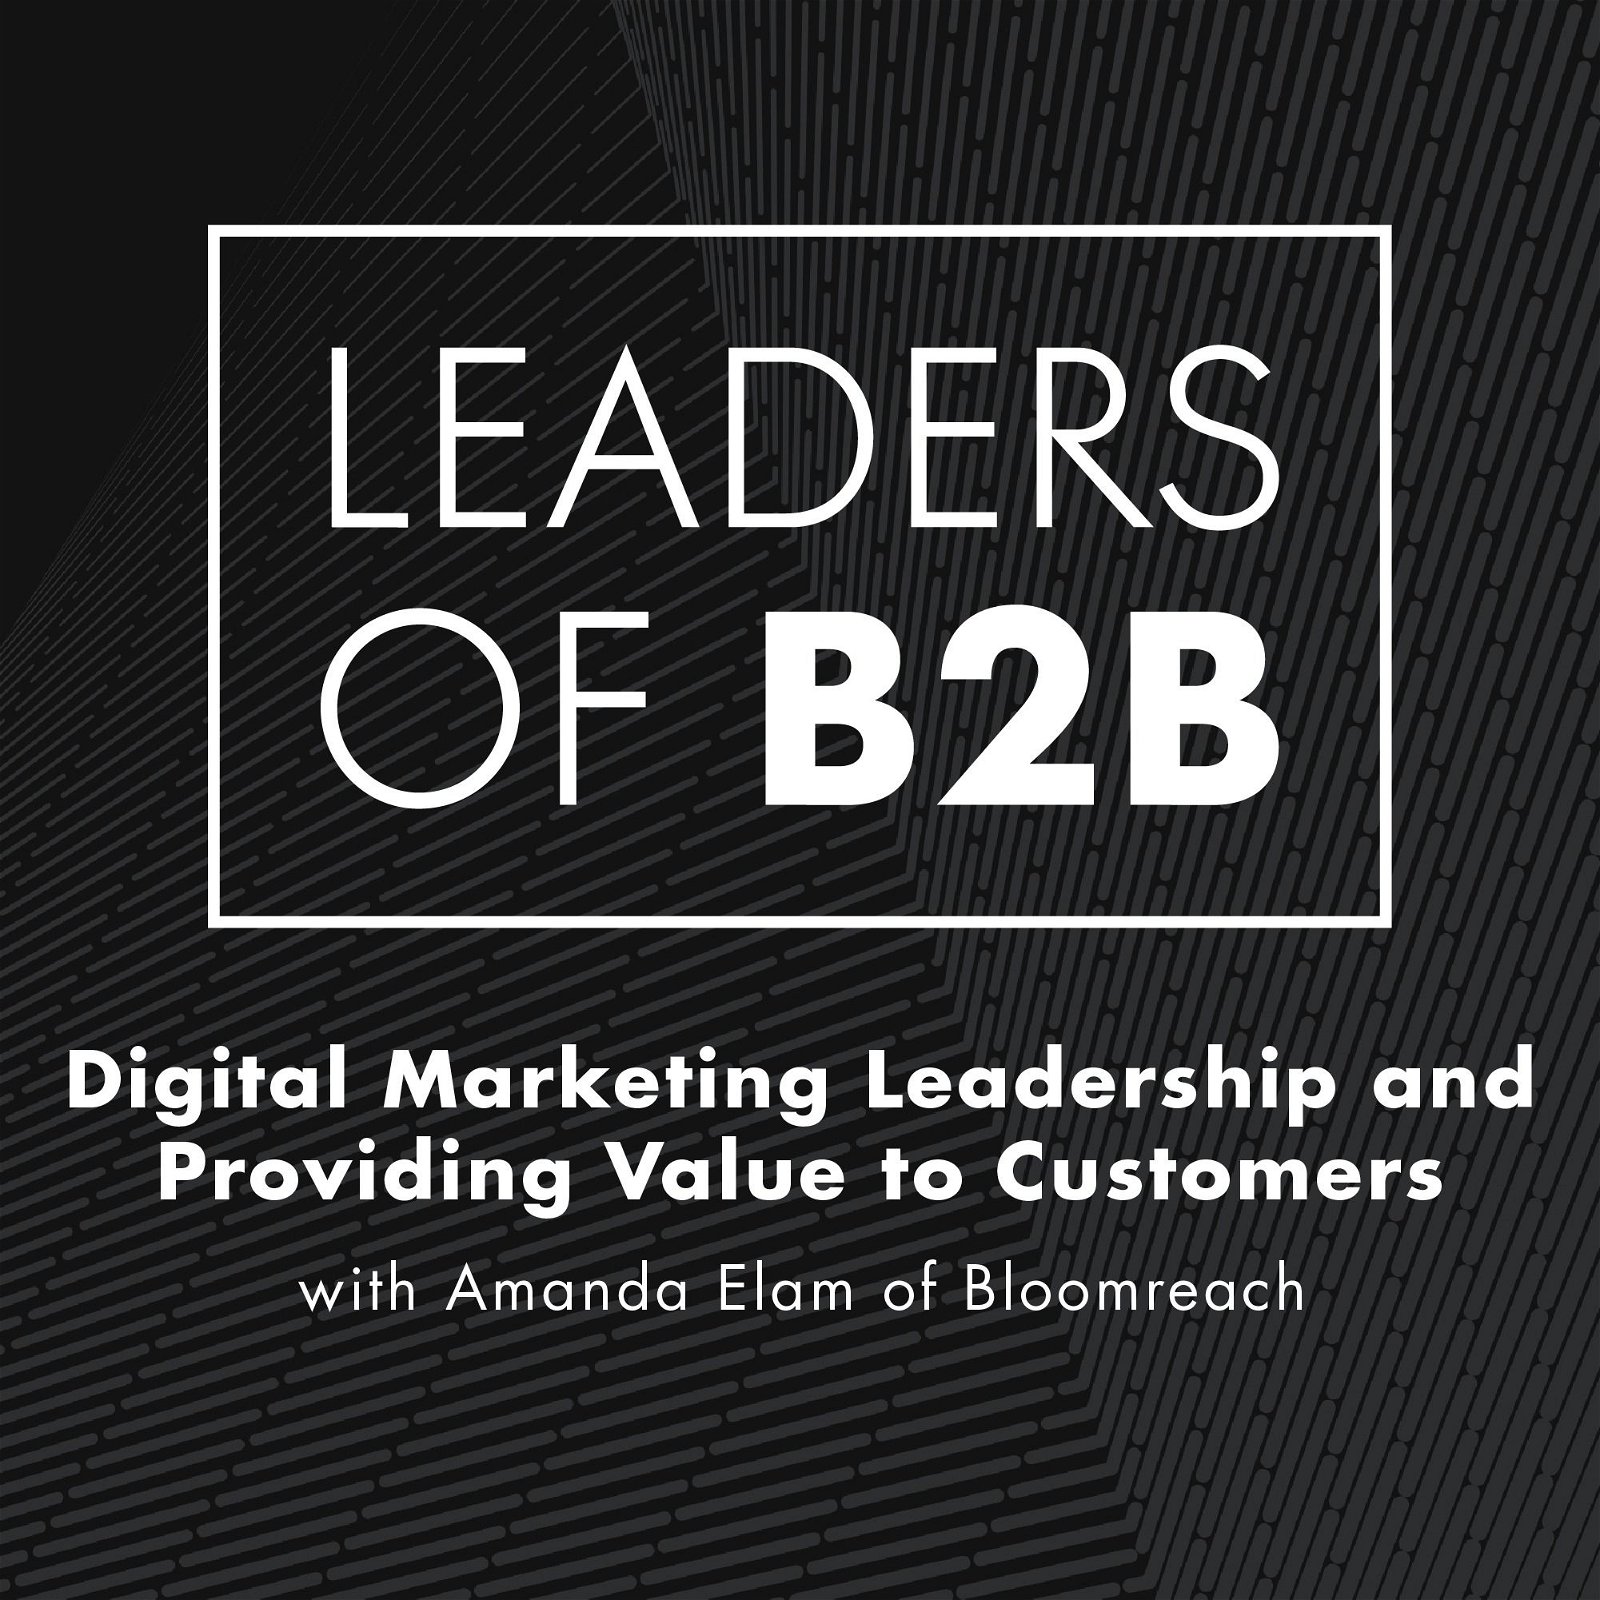 Digital Marketing Leadership and Providing Value to Customers with Amanda Elam of Bloomreach